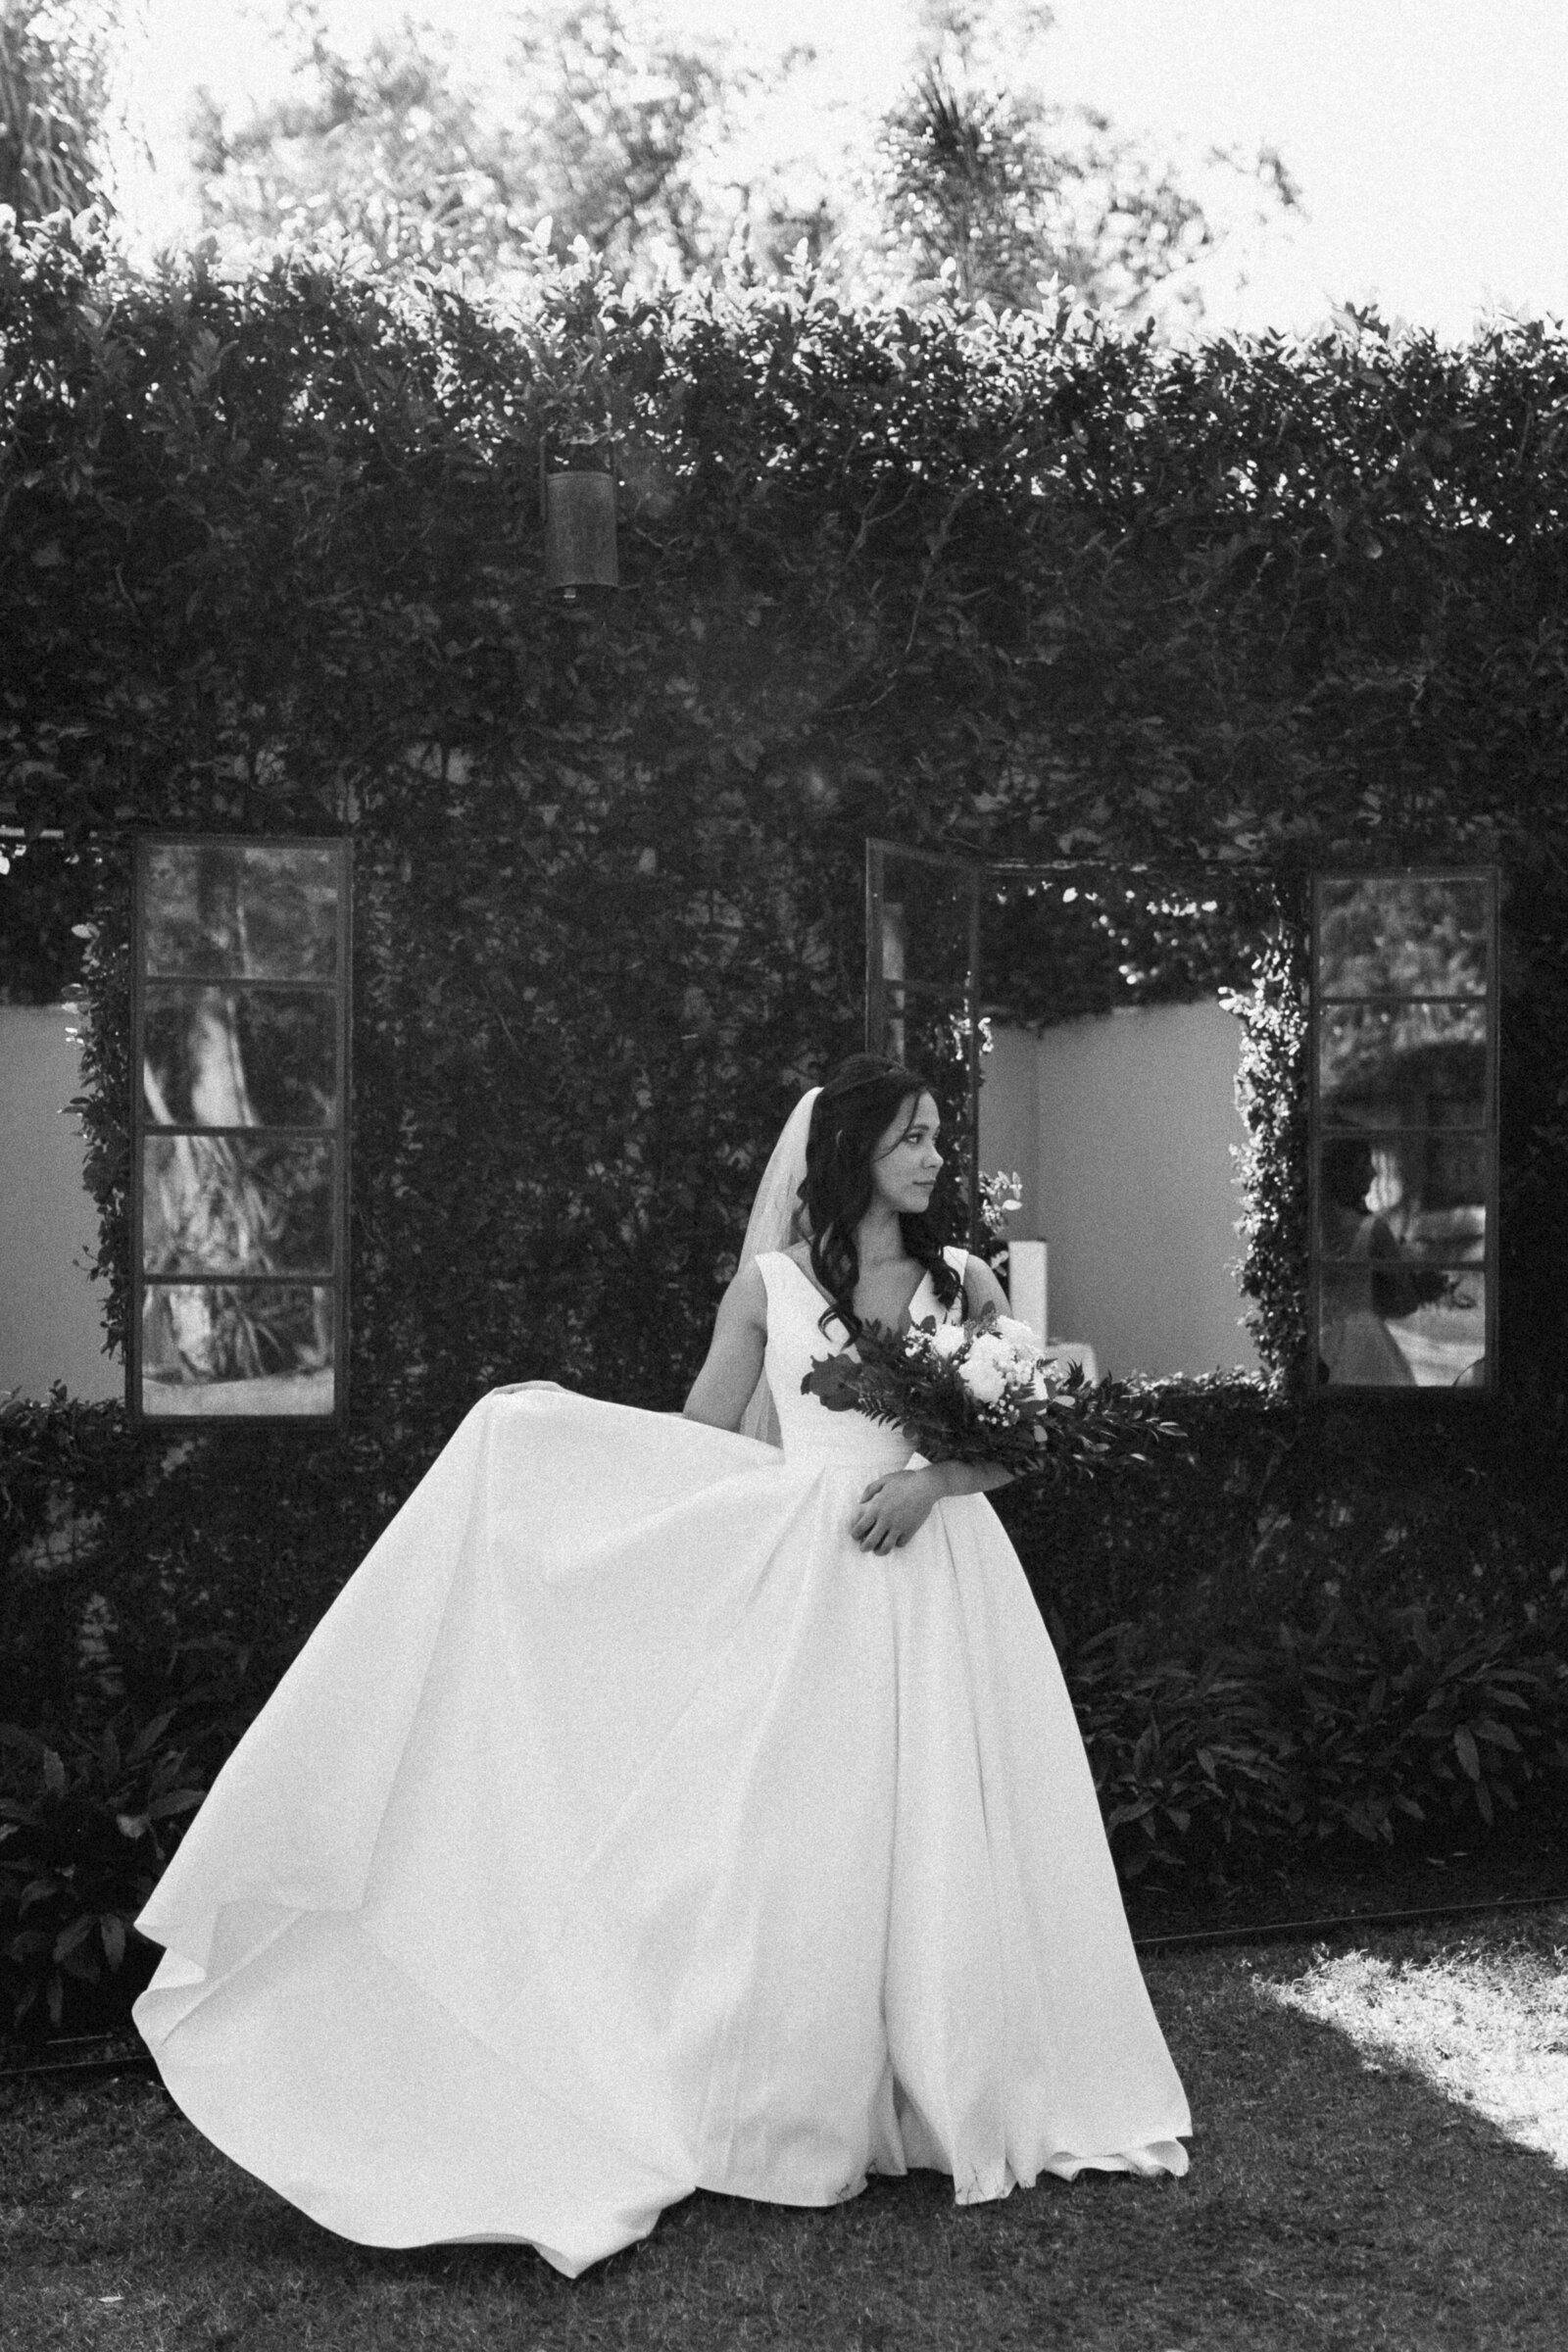 Christin Sofka Photography - The Acre Wedding Winter Park Florida